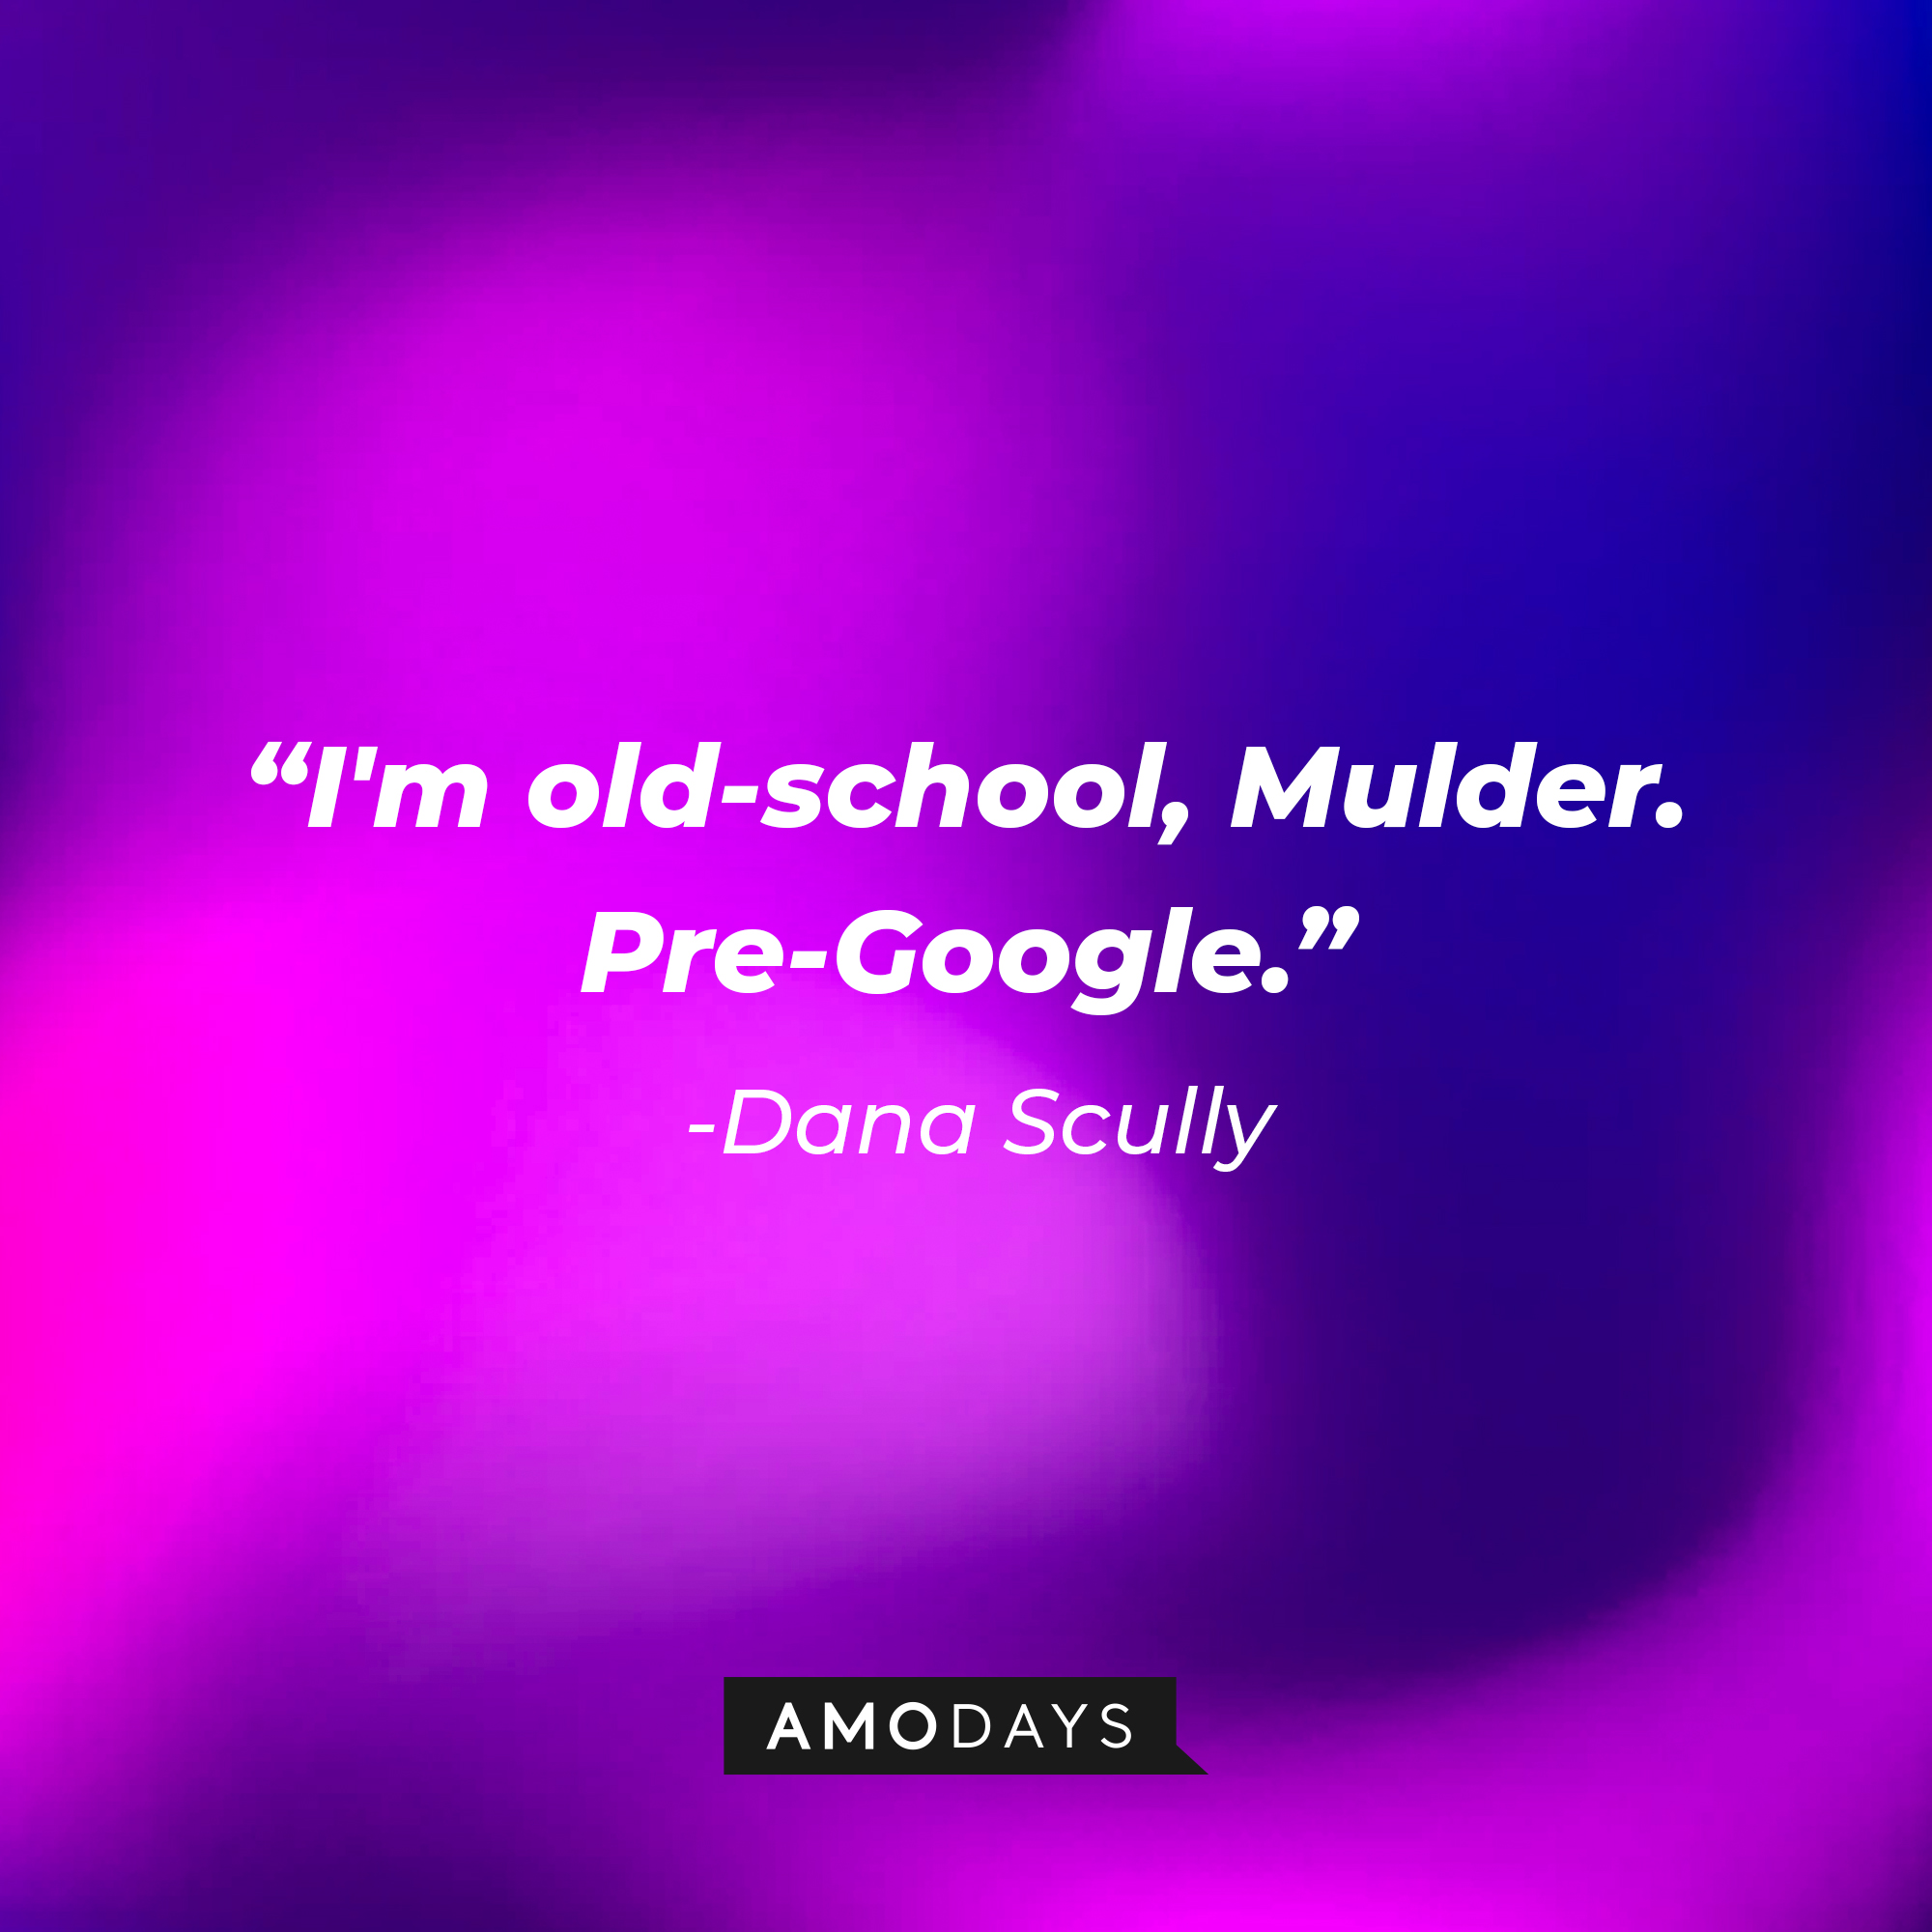 Dana Scully's quote: "I'm old-school, Mulder. Pre-Google." | Source: AmoDays